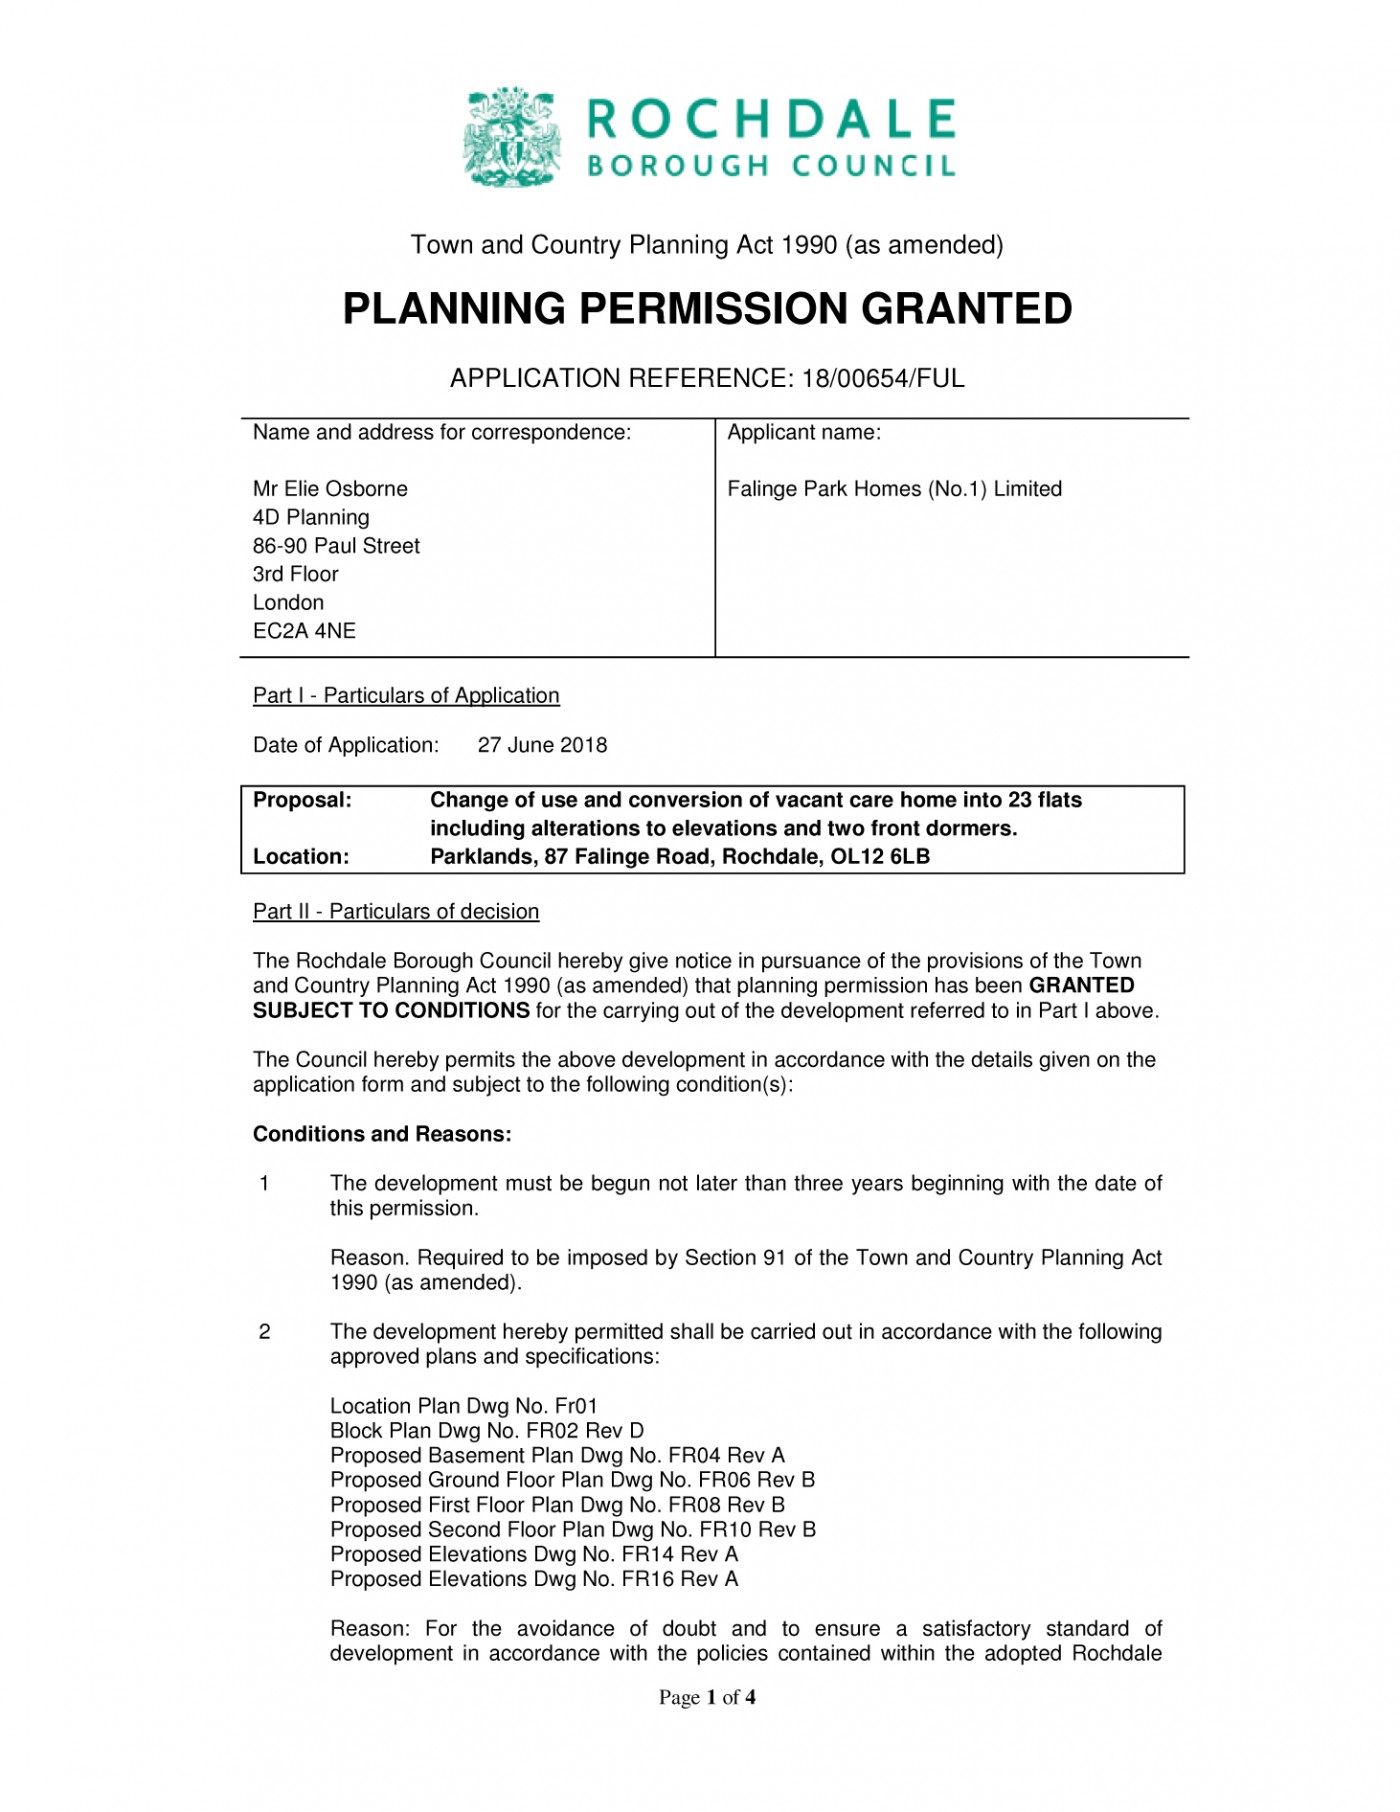 Rochdale Council Decision Notice - GRANTED